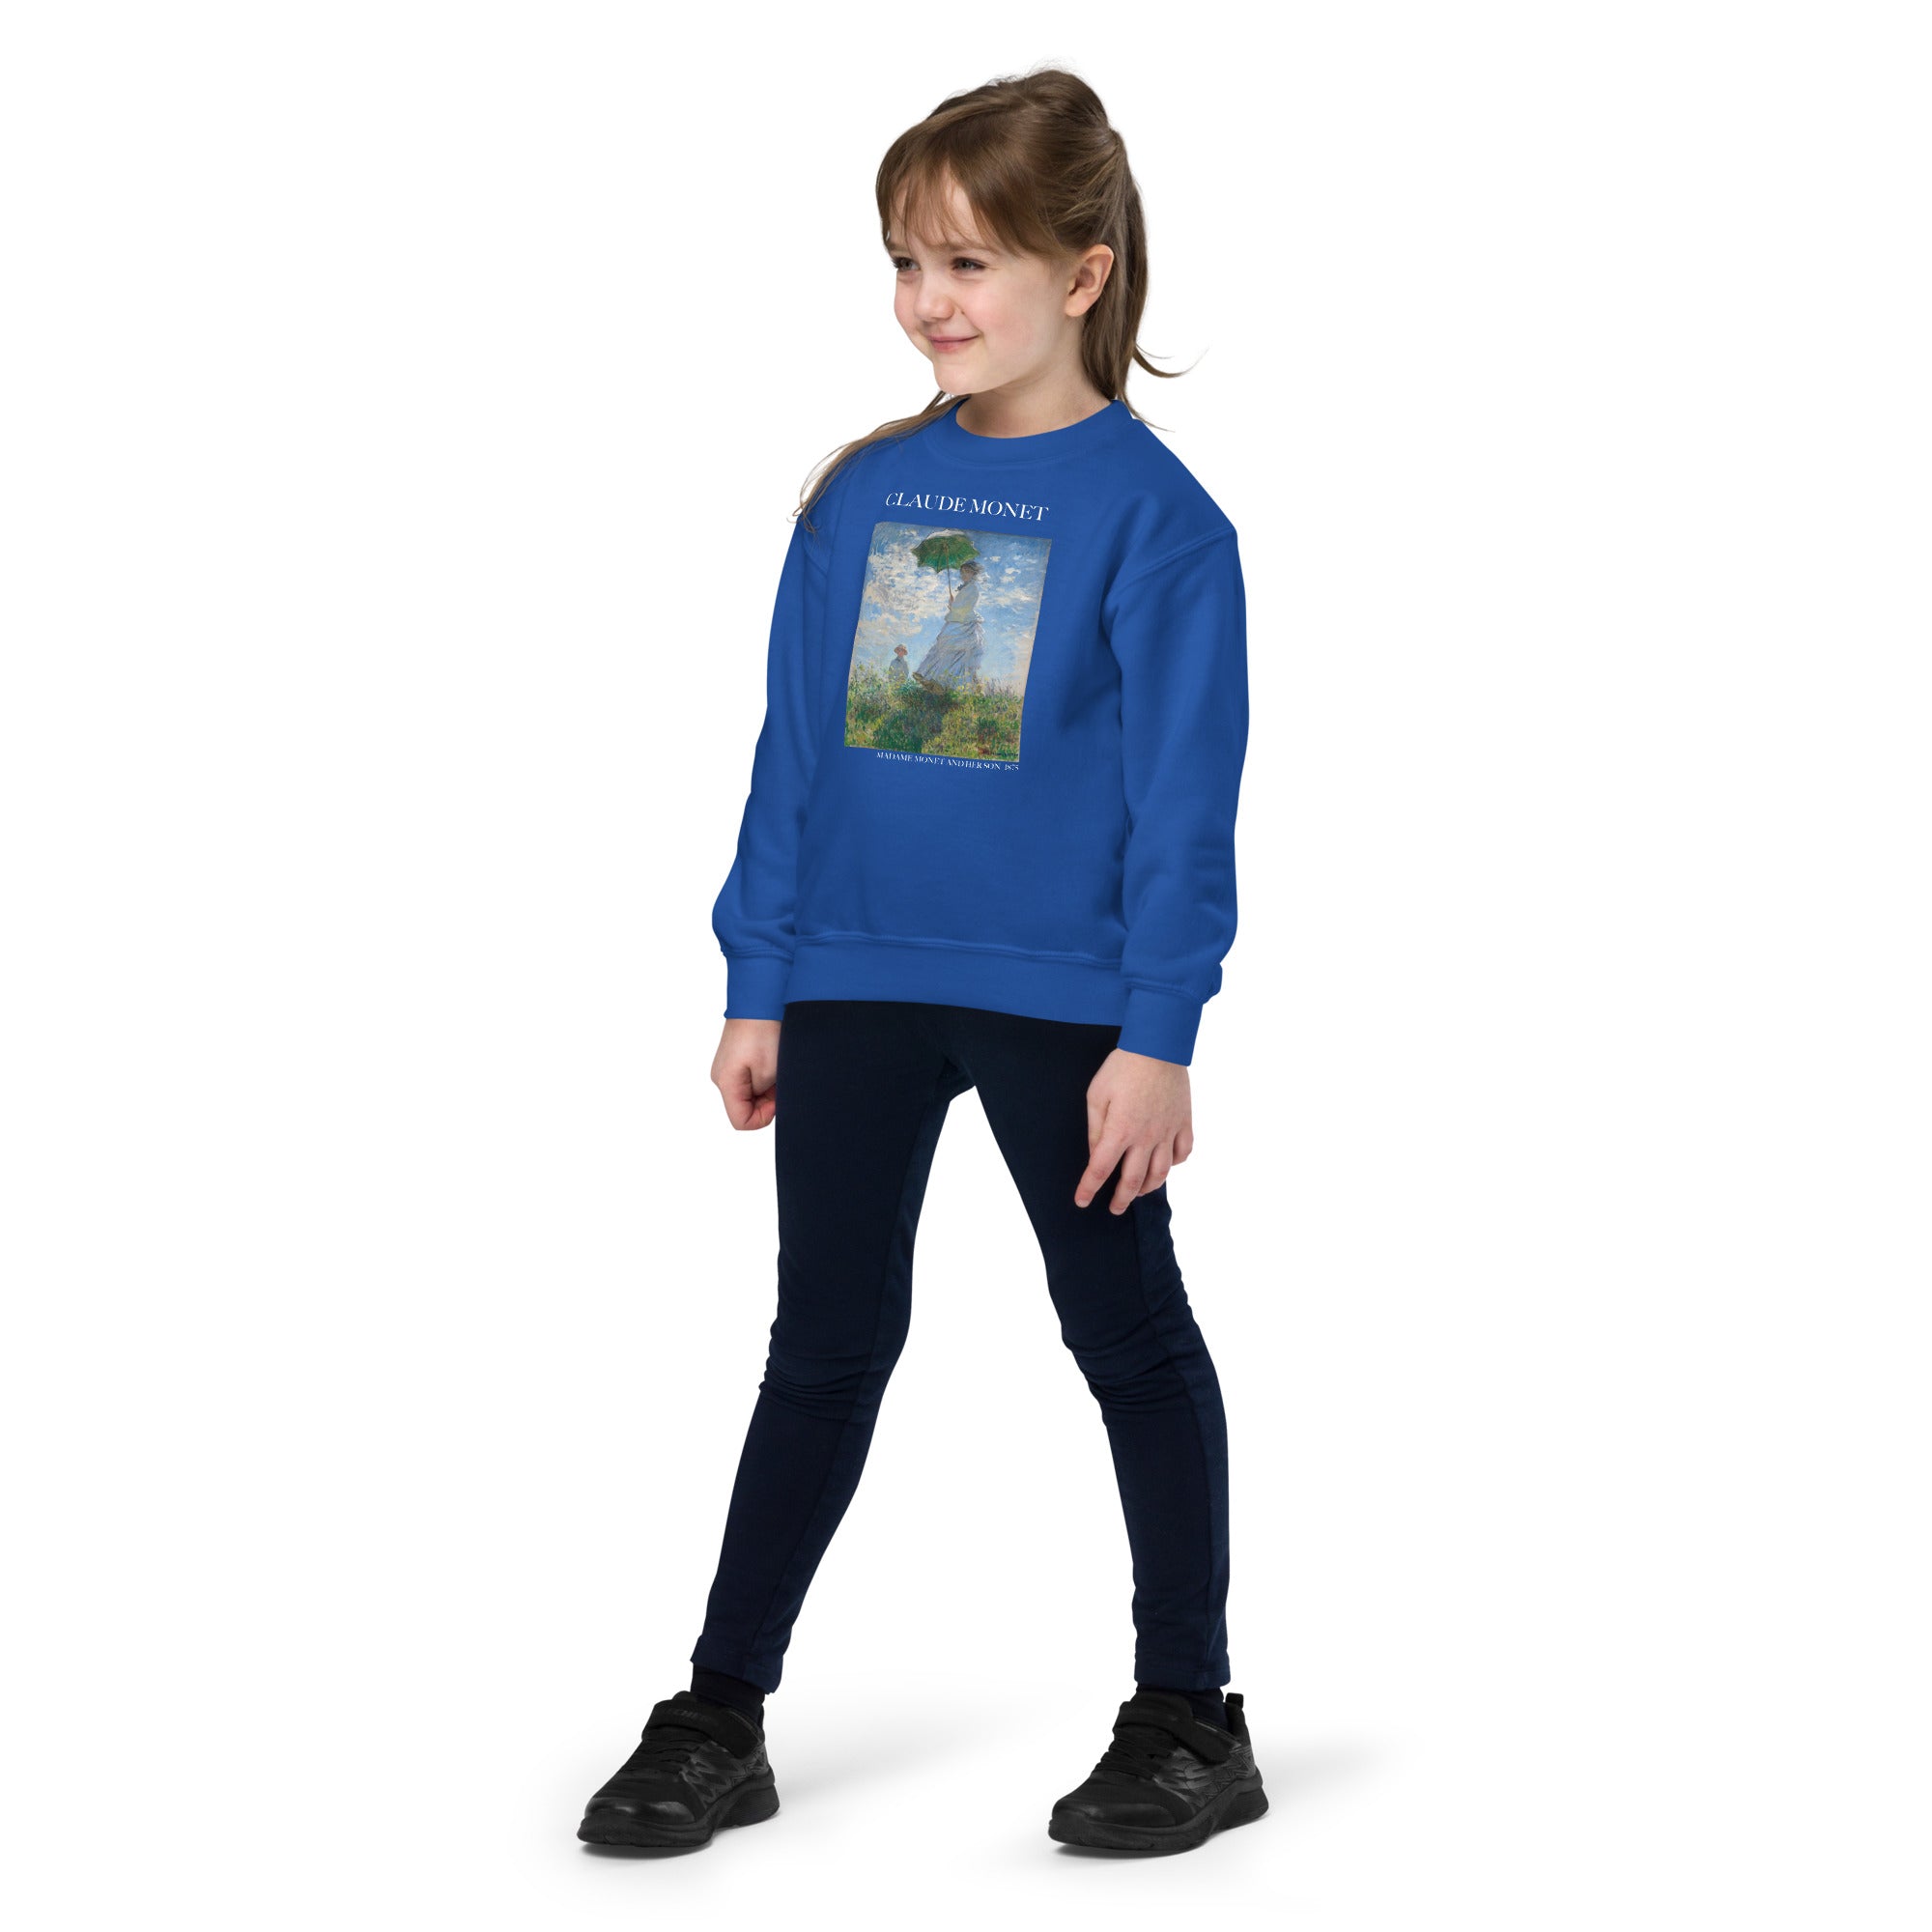 Claude Monet 'Madame Monet and Her Son' Famous Painting Crewneck Sweatshirt | Premium Youth Art Sweatshirt